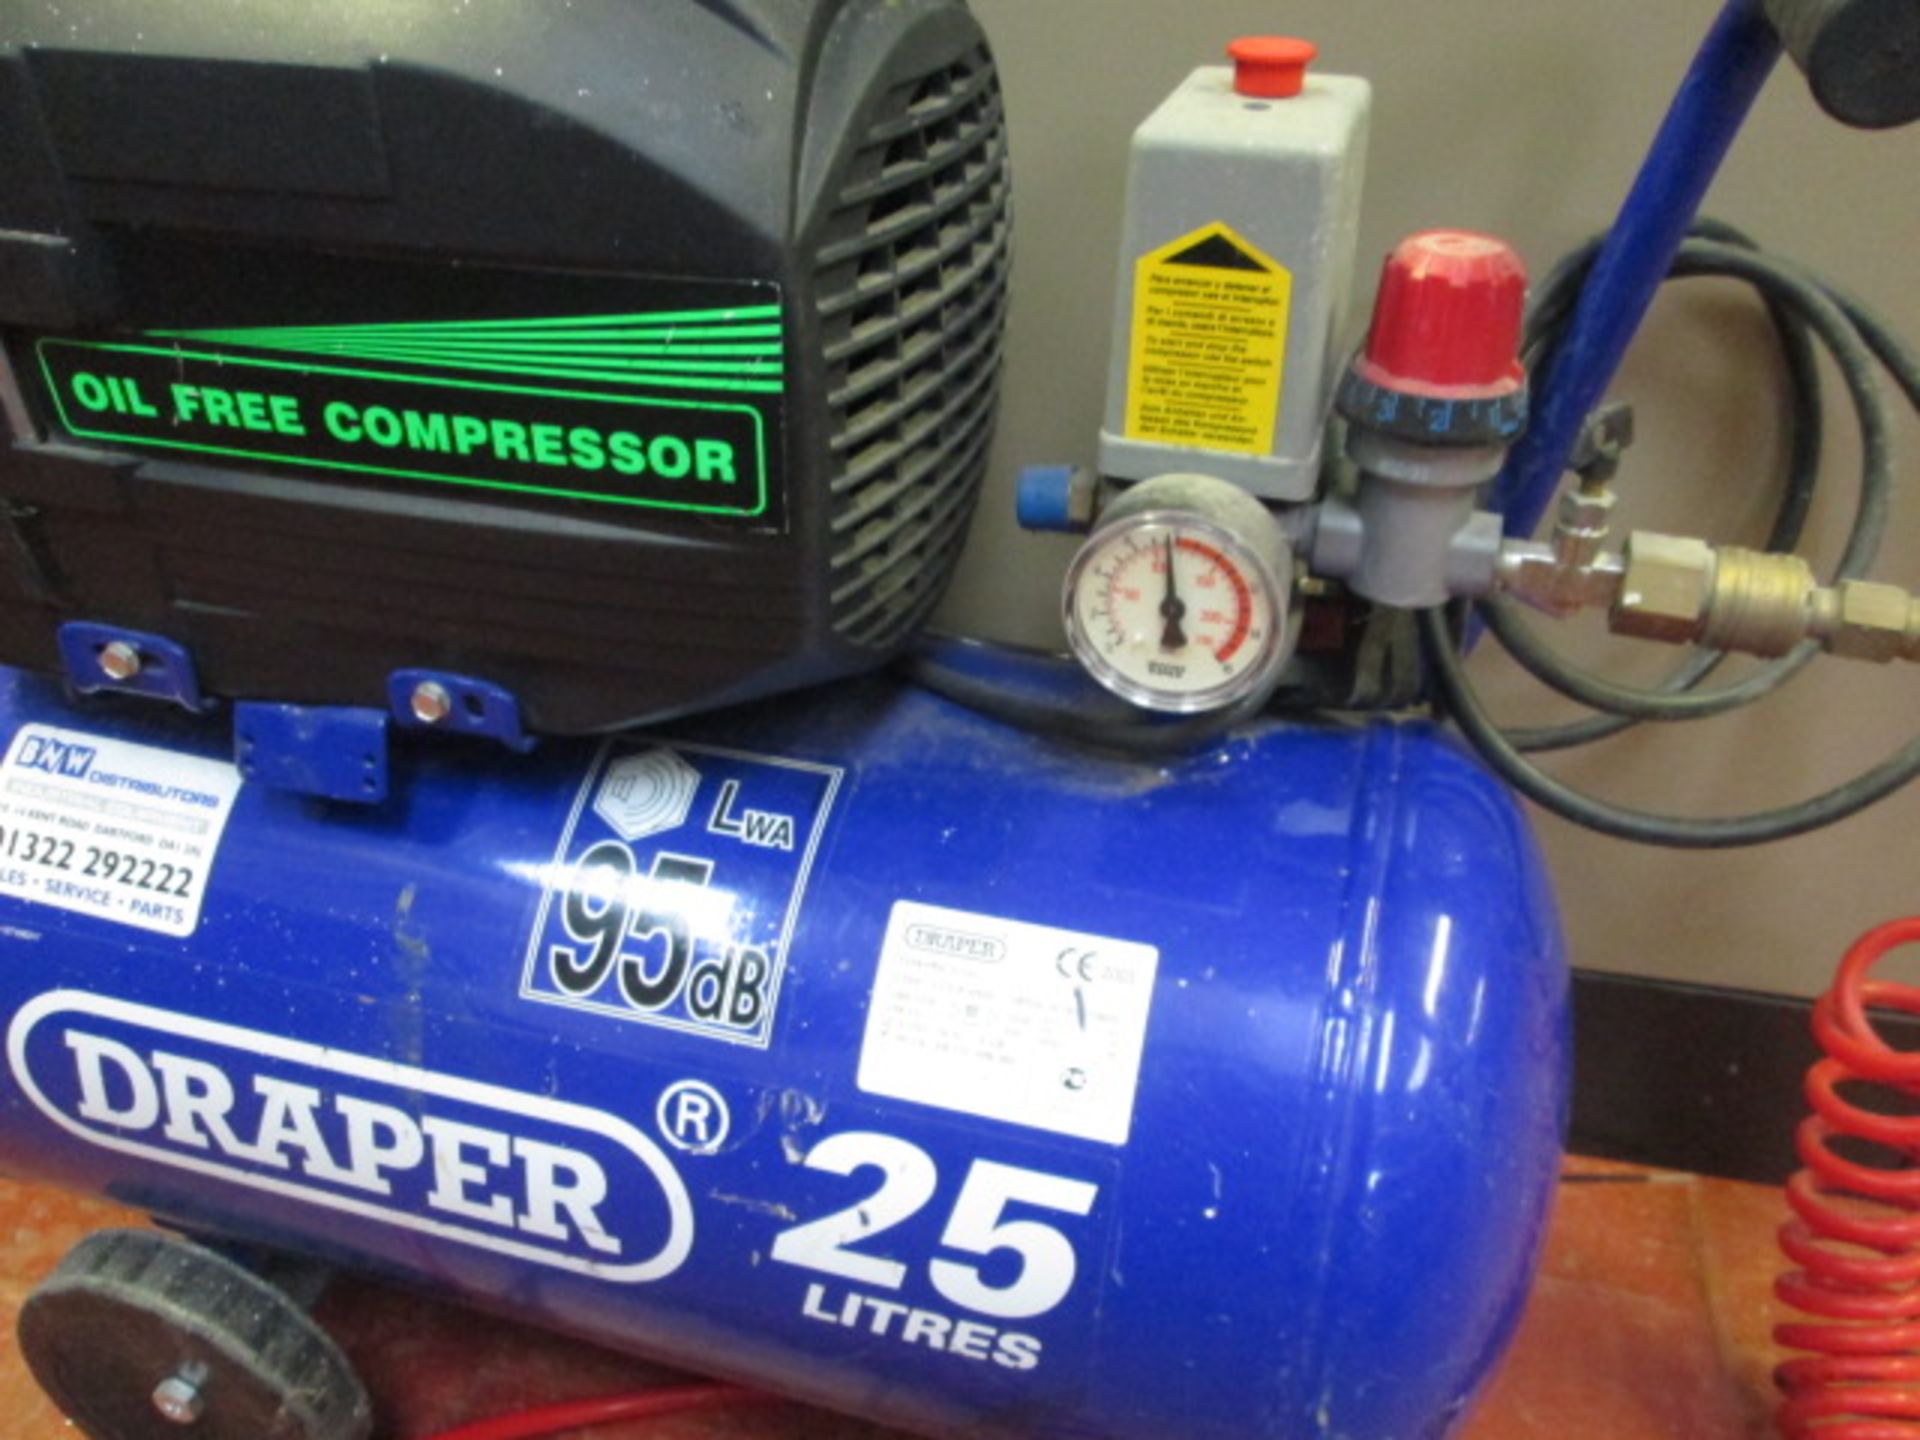 Draper 25 Lt Oil Free Compressor, On Wheels - Image 2 of 3